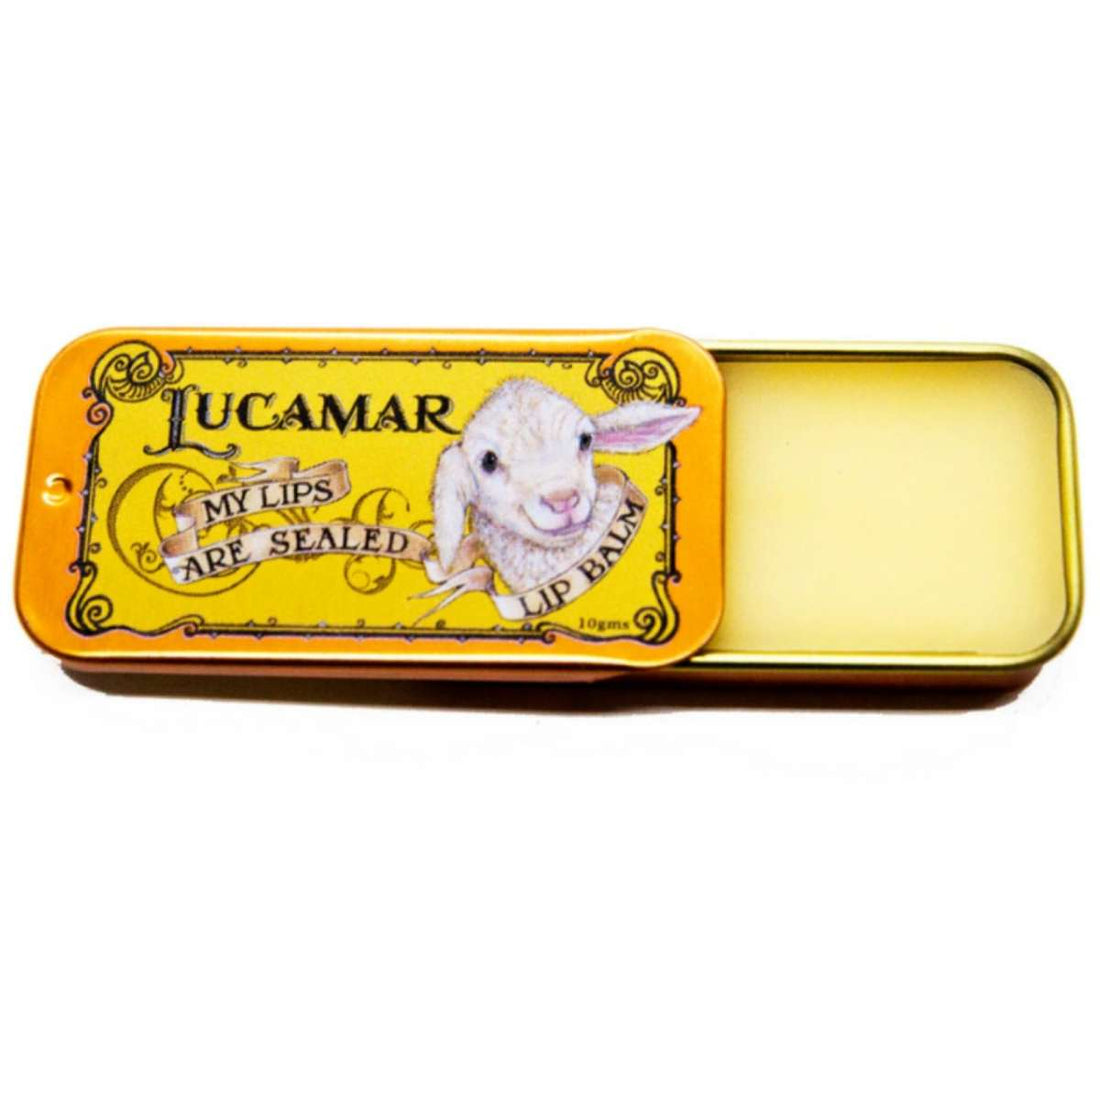 Lucamar Strawberry My Lips Are Sealed Organic Lip Balm 10g